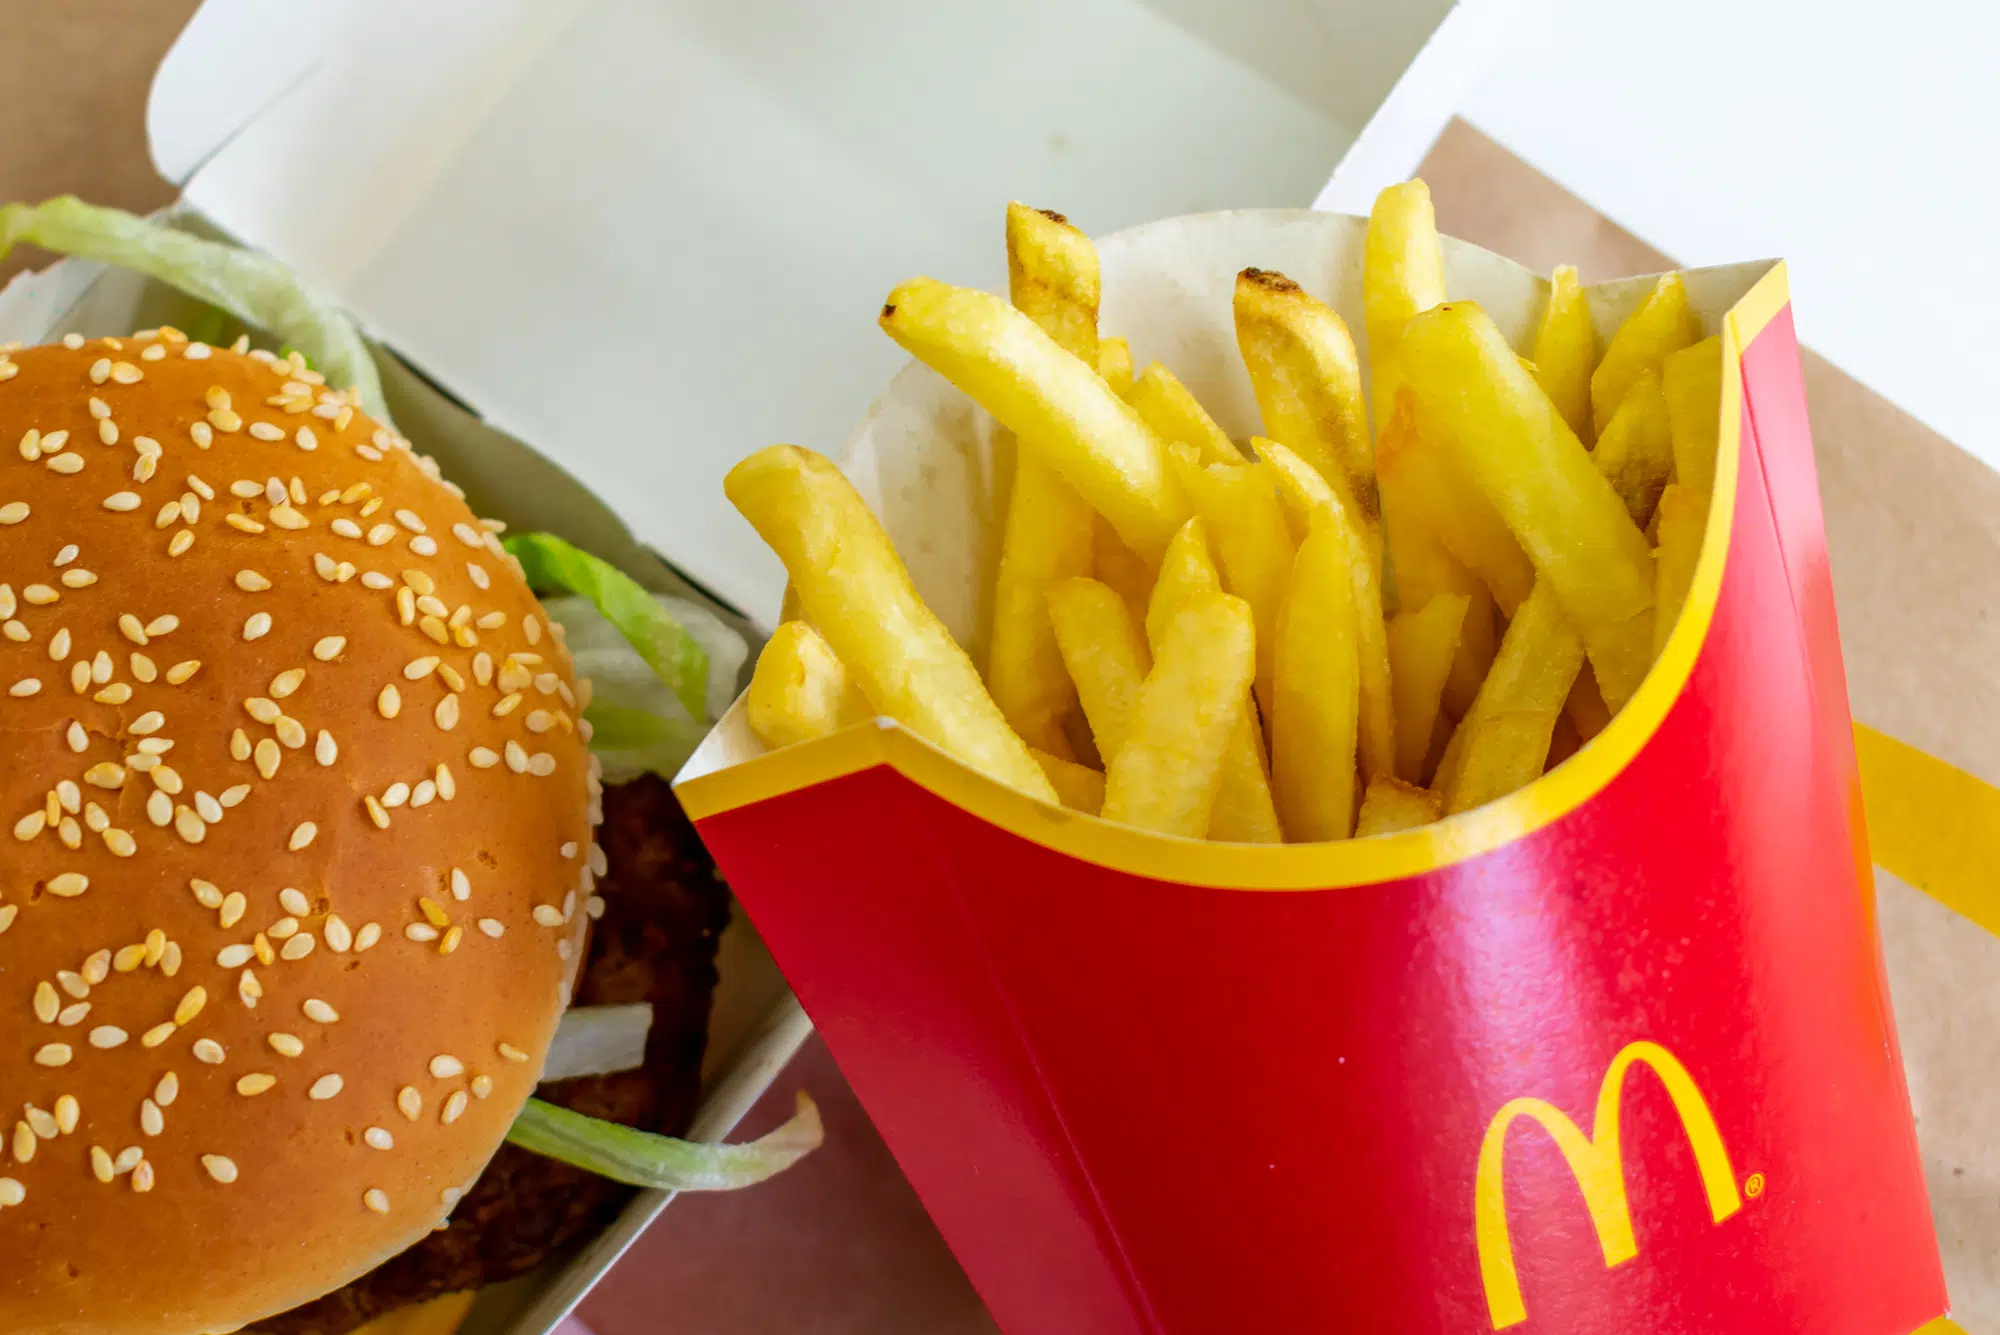 London. UK- 01.28.2021. A real life Big Mac and medium fries from a McDonald's restaurant.